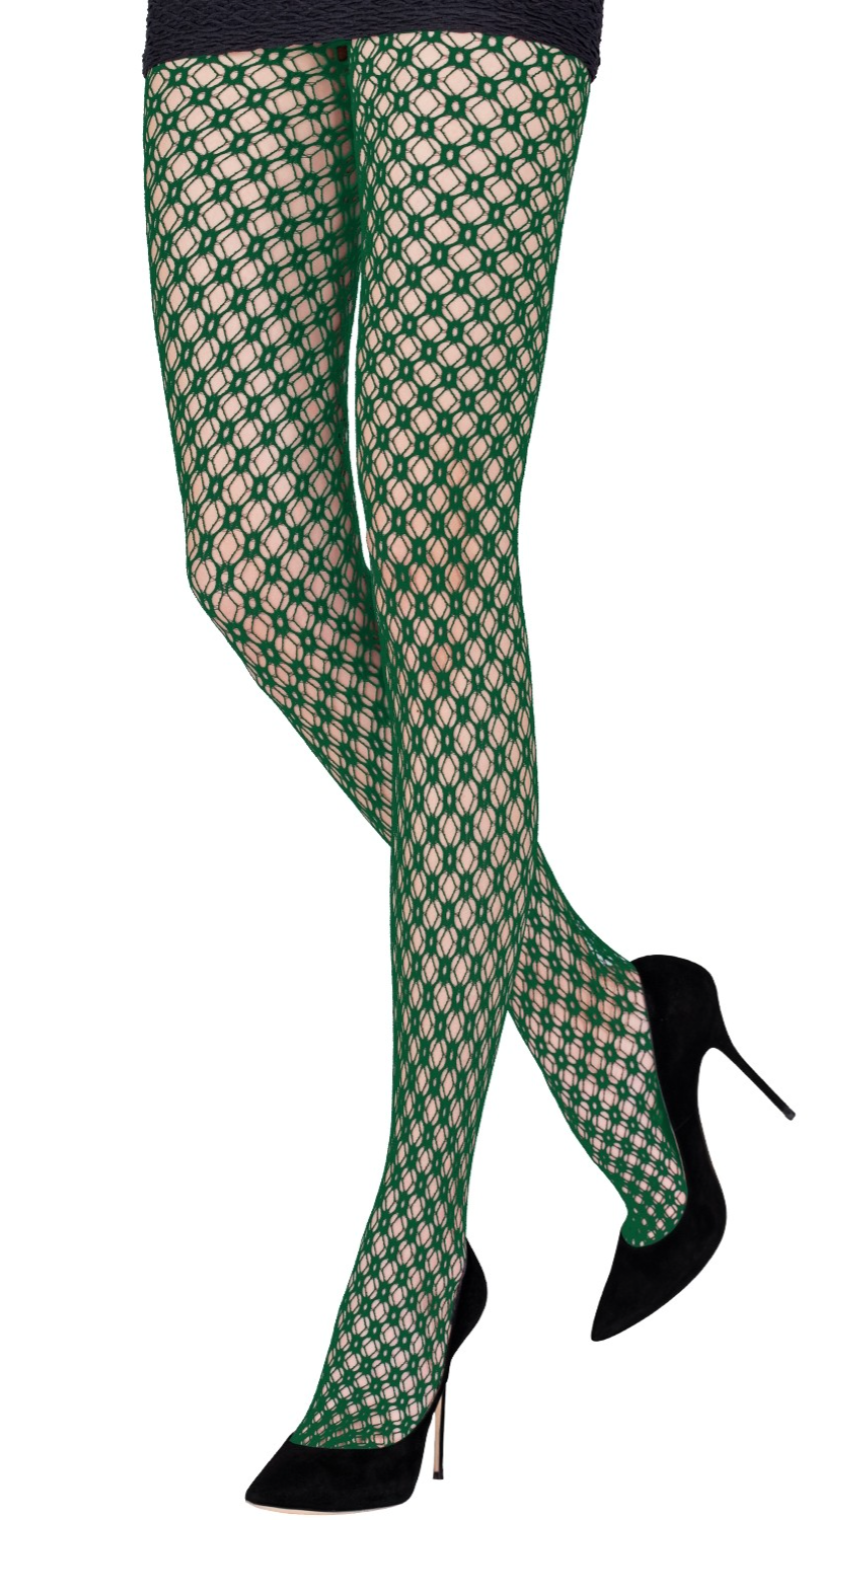 Emilio Cavallini Prism Net Tights - Green openwork geometric diamond style fashion tights.